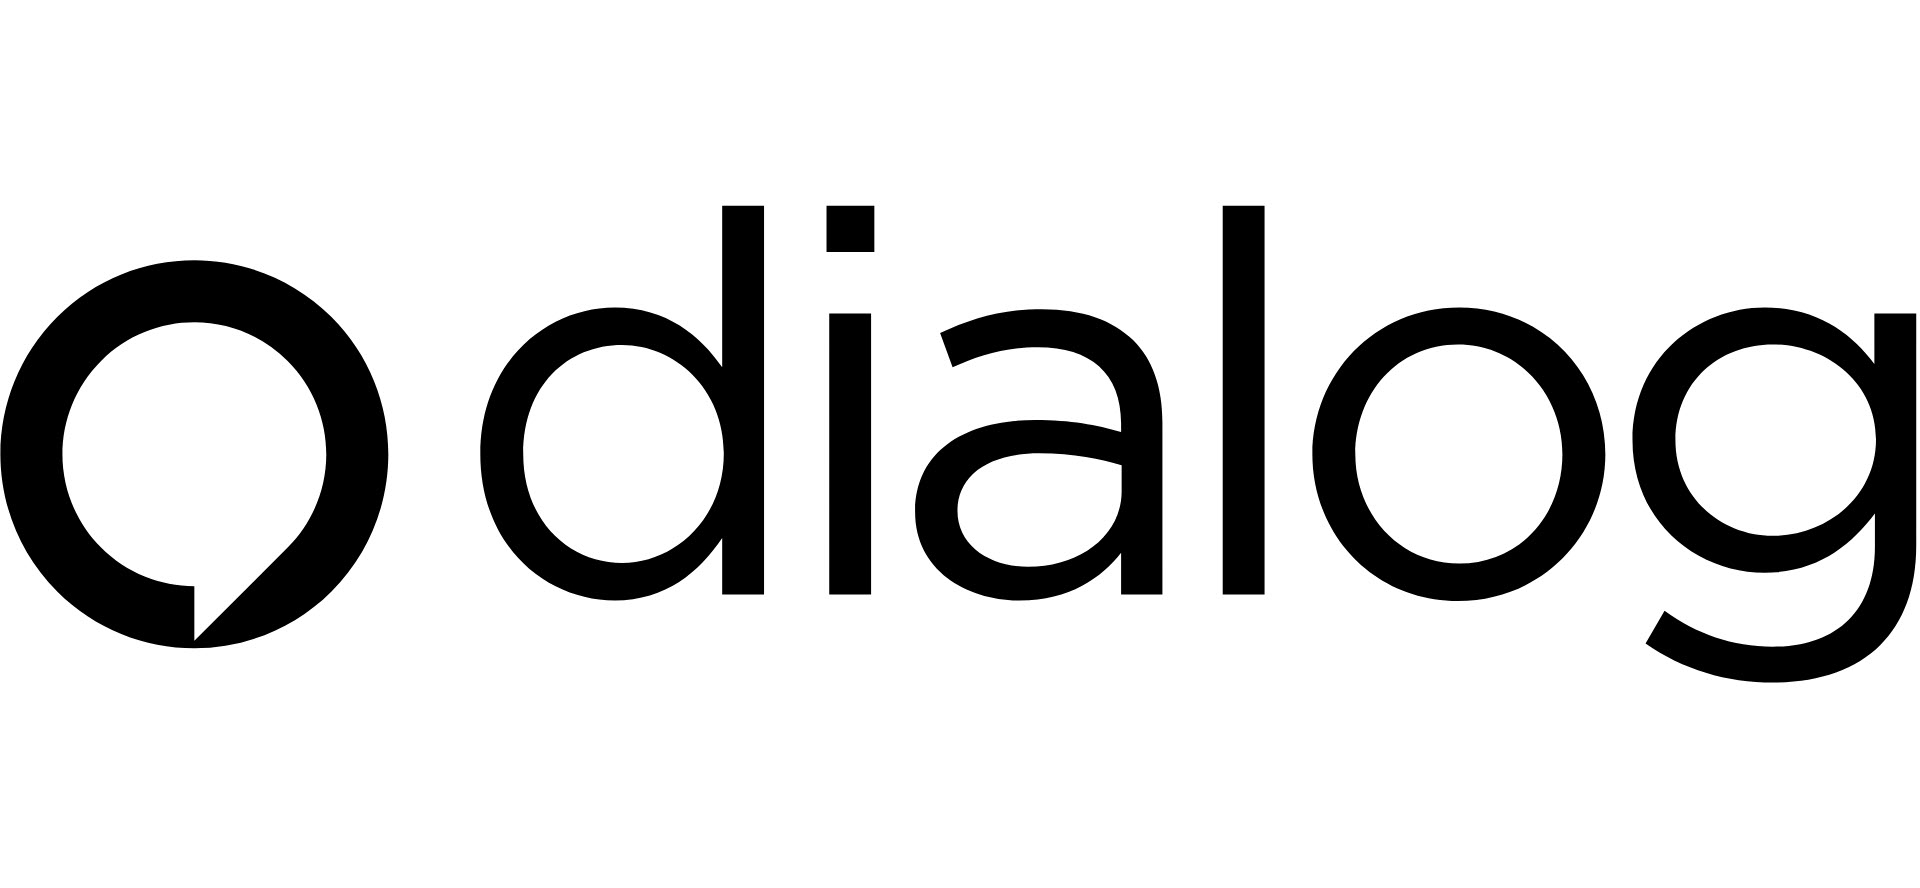 Мессенджер диалог. Dialog мессенджер. Диалог логотип. Dialog корпоративный мессенджер. Логотип компания диалог.